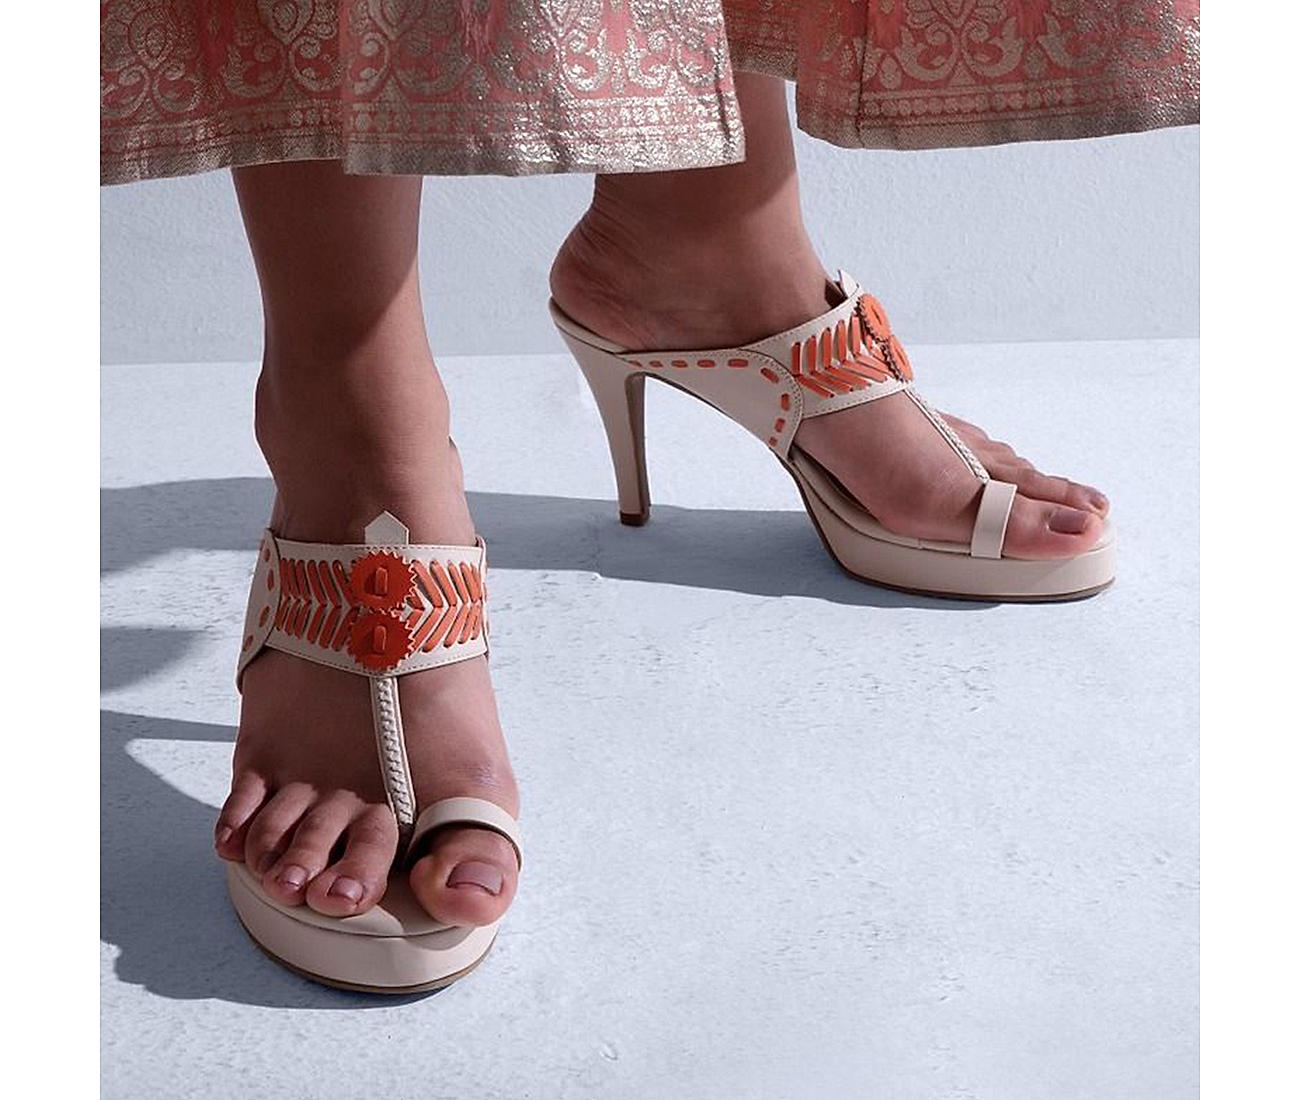 Buy TRYME Women's Kolhapuri Chappal Block Heel Sandals Ethnic Block Heel  for Party & Occasions at Amazon.in